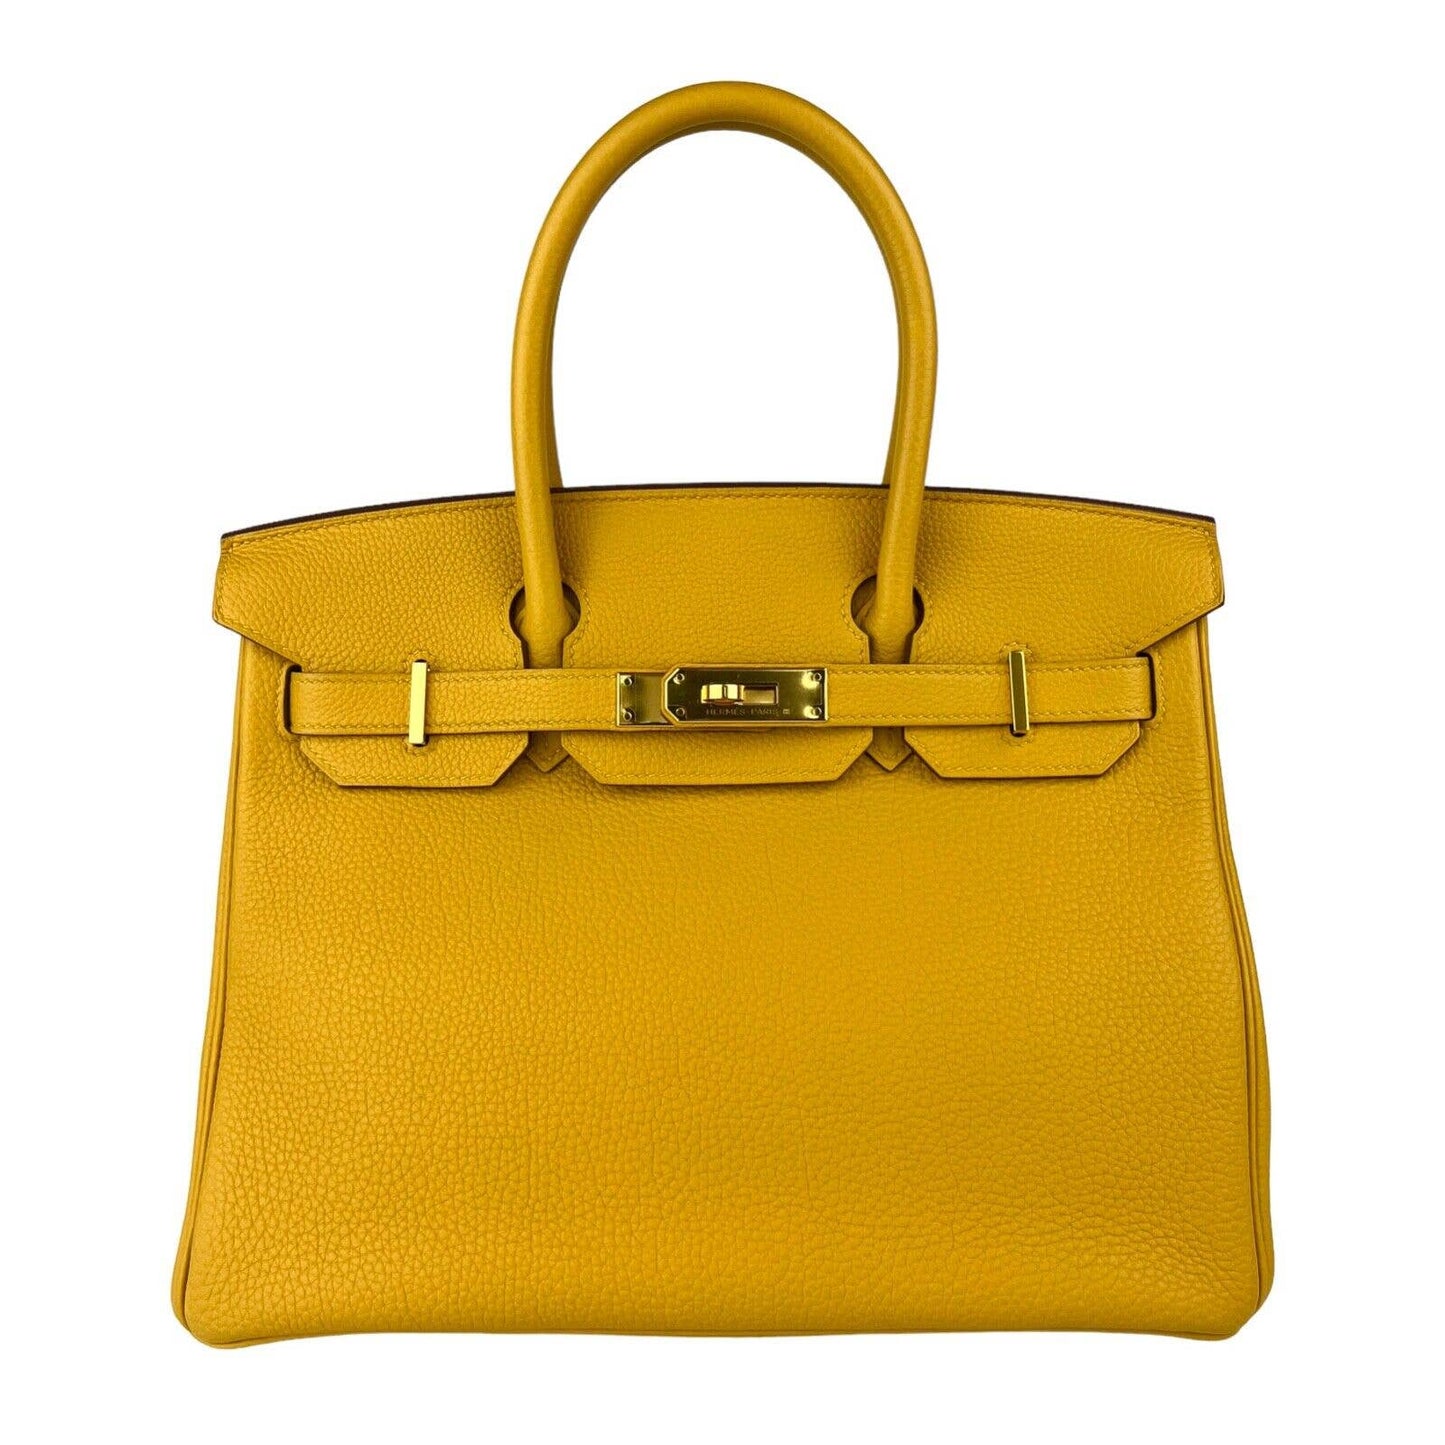 Hermès Birkin 30 Jaune Ambre Yellow Togo Leather Gold Hardware Handbag Bag